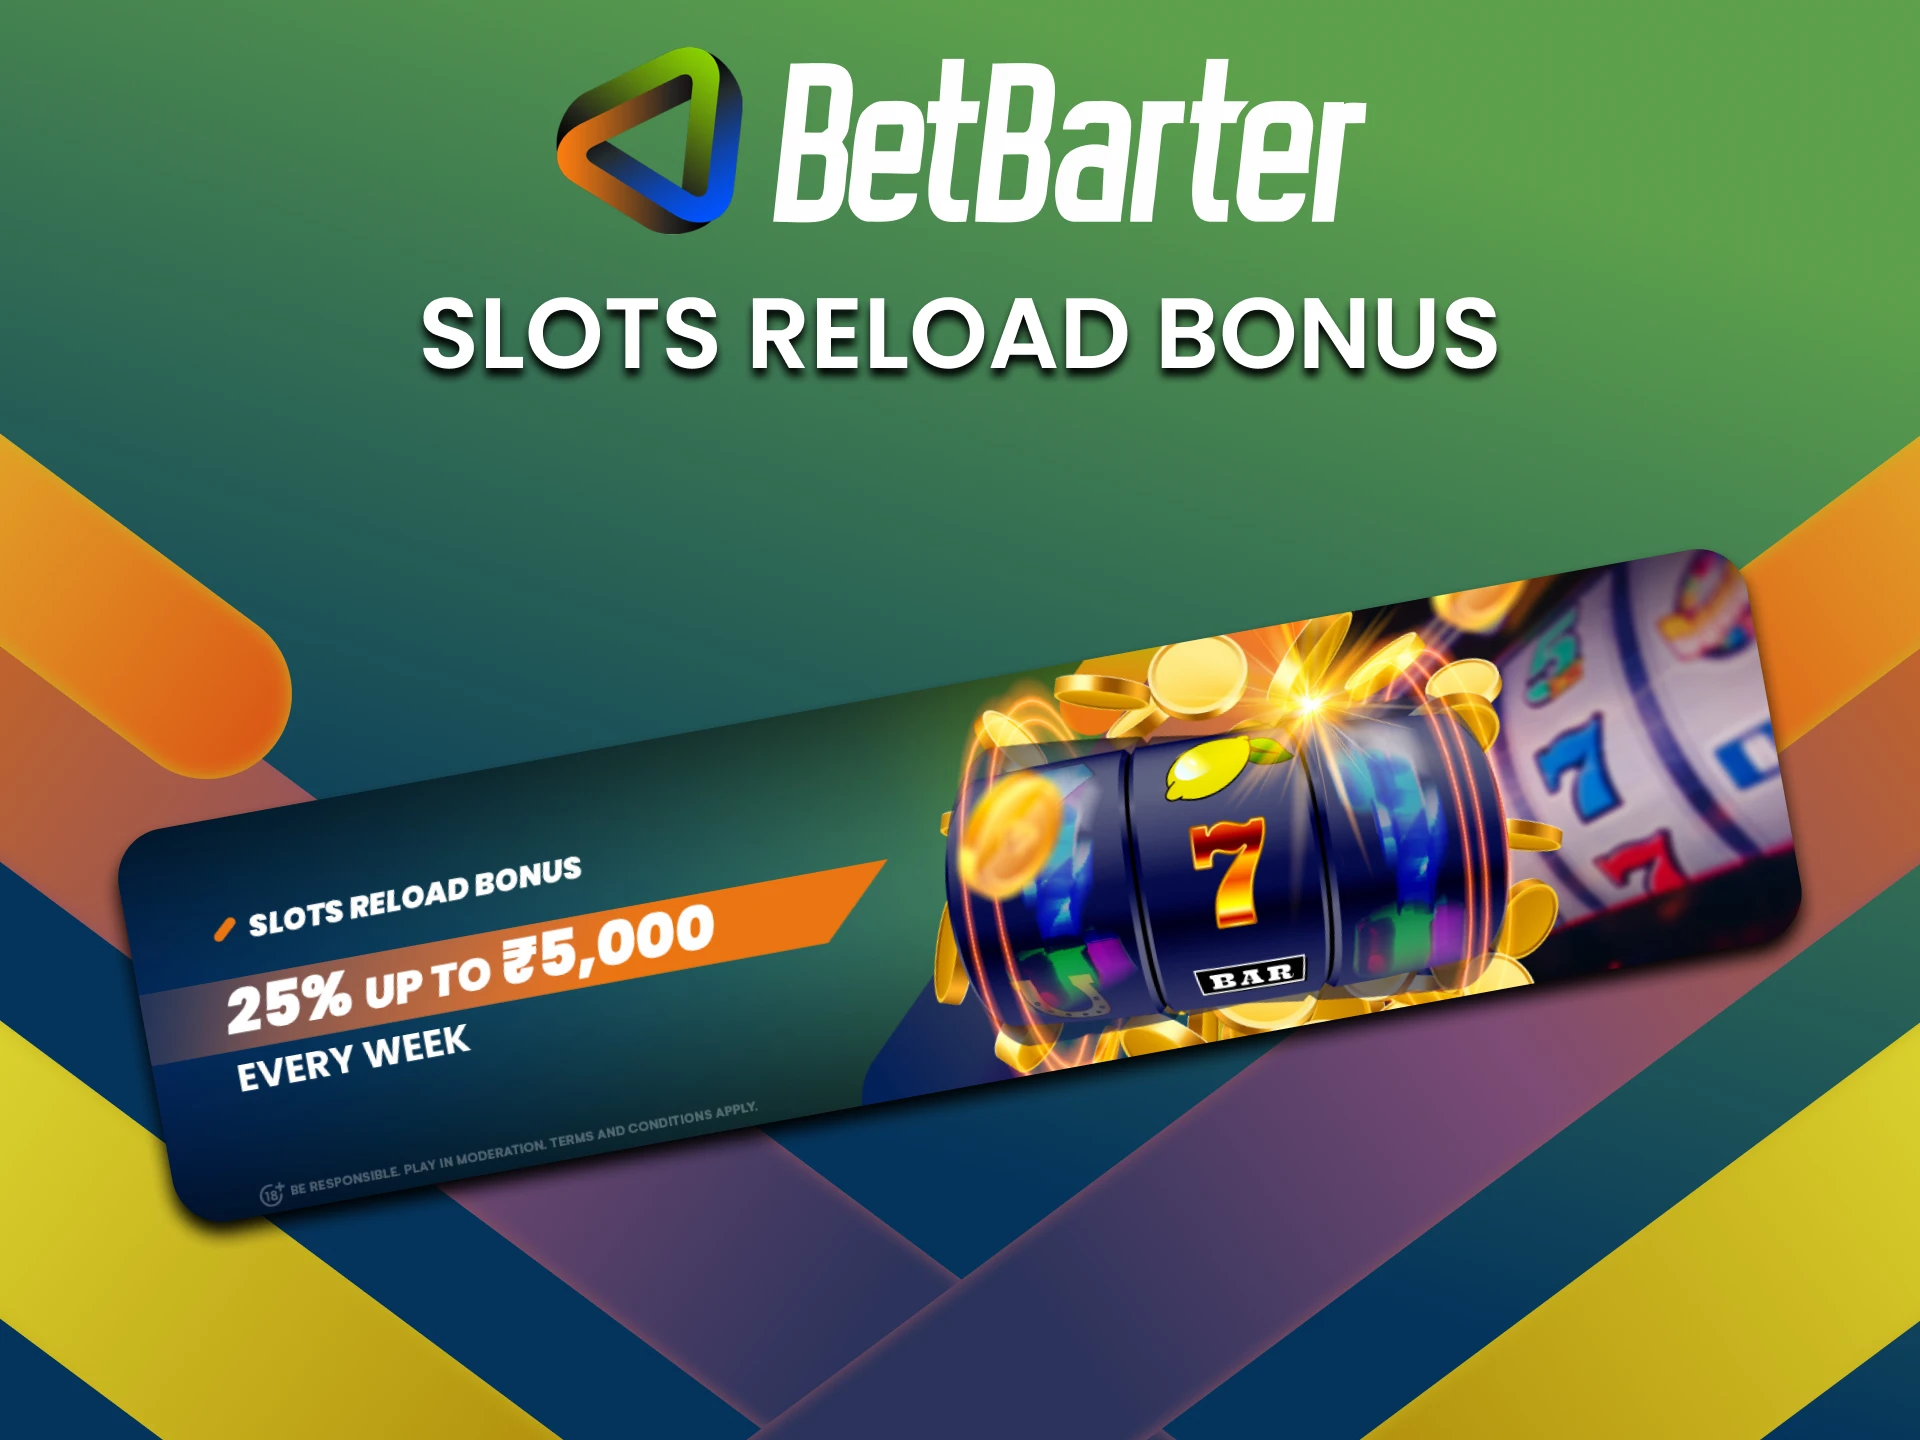 BetBarter gives a bonus for Slot.